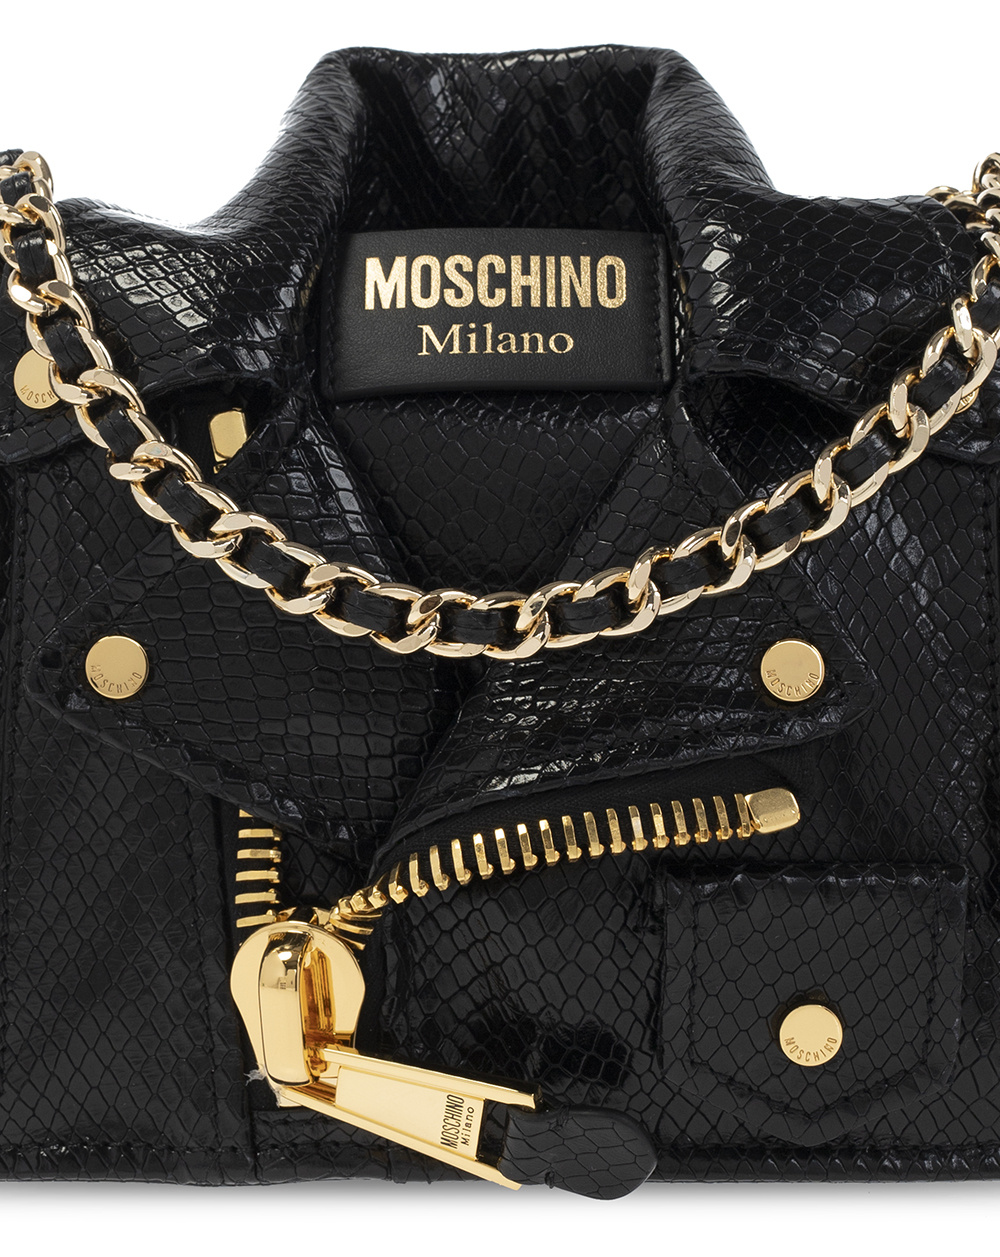 Moschino Shoulder bag with biker jacket motif